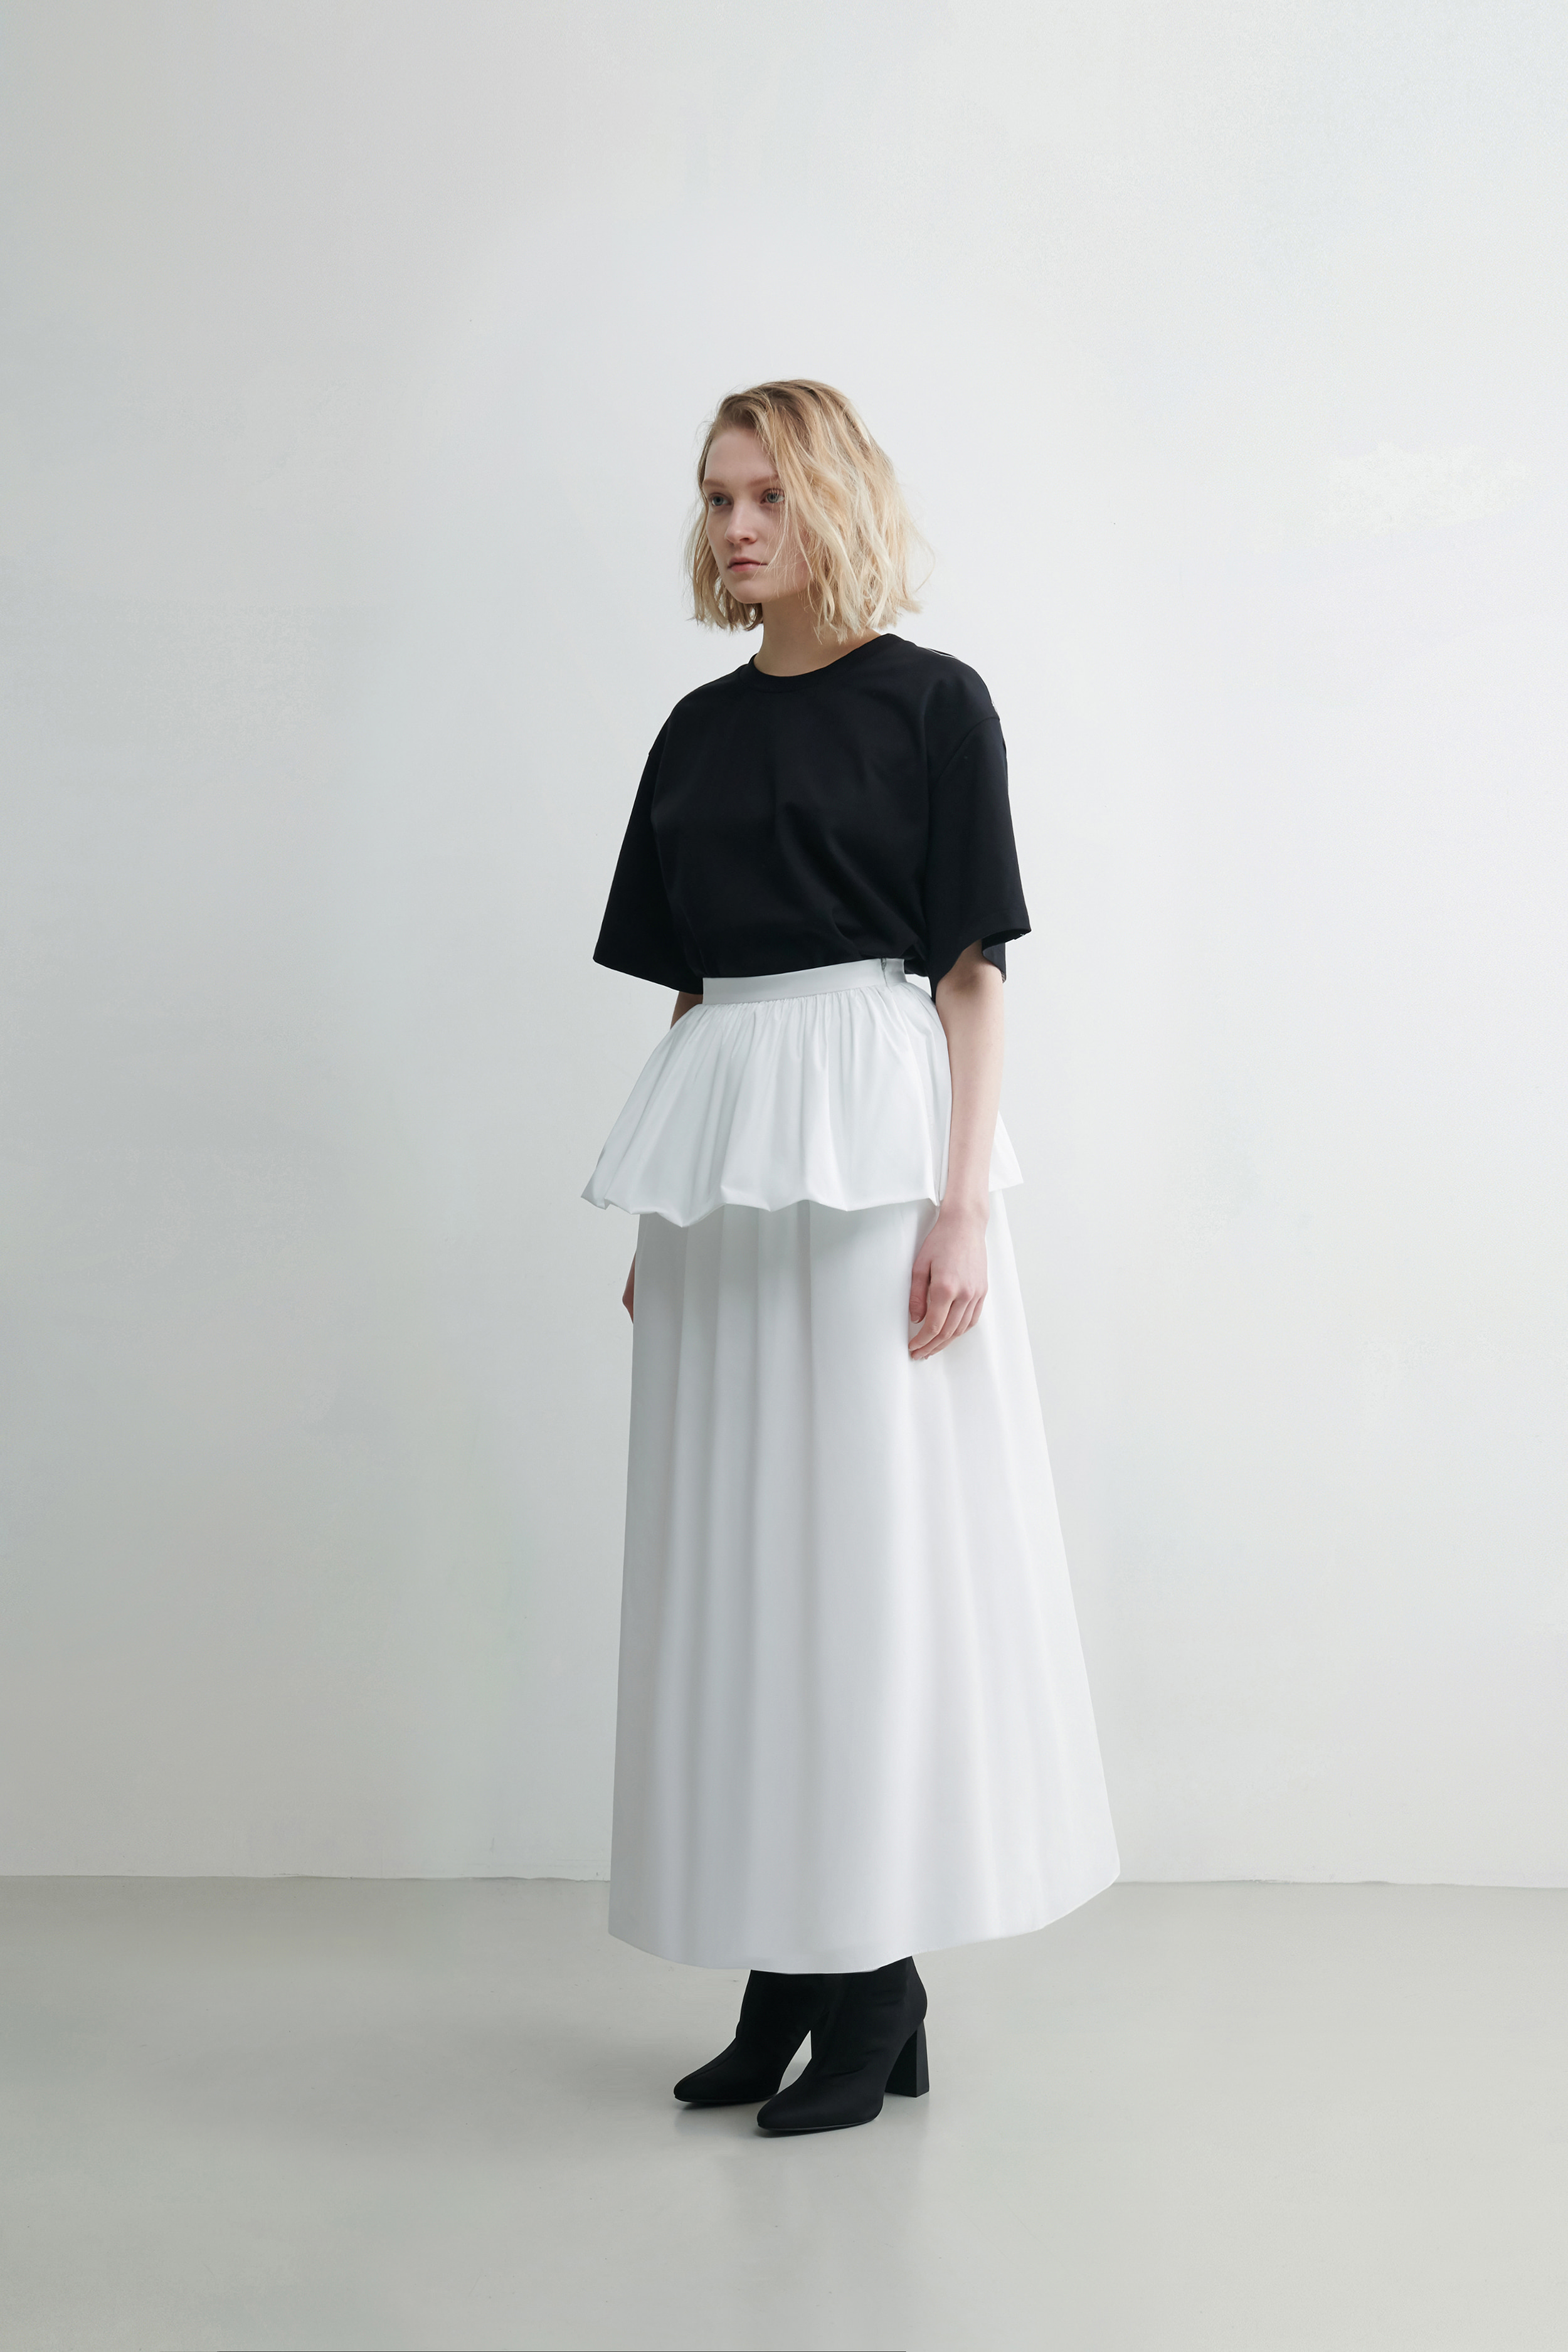 Shirred white skirt